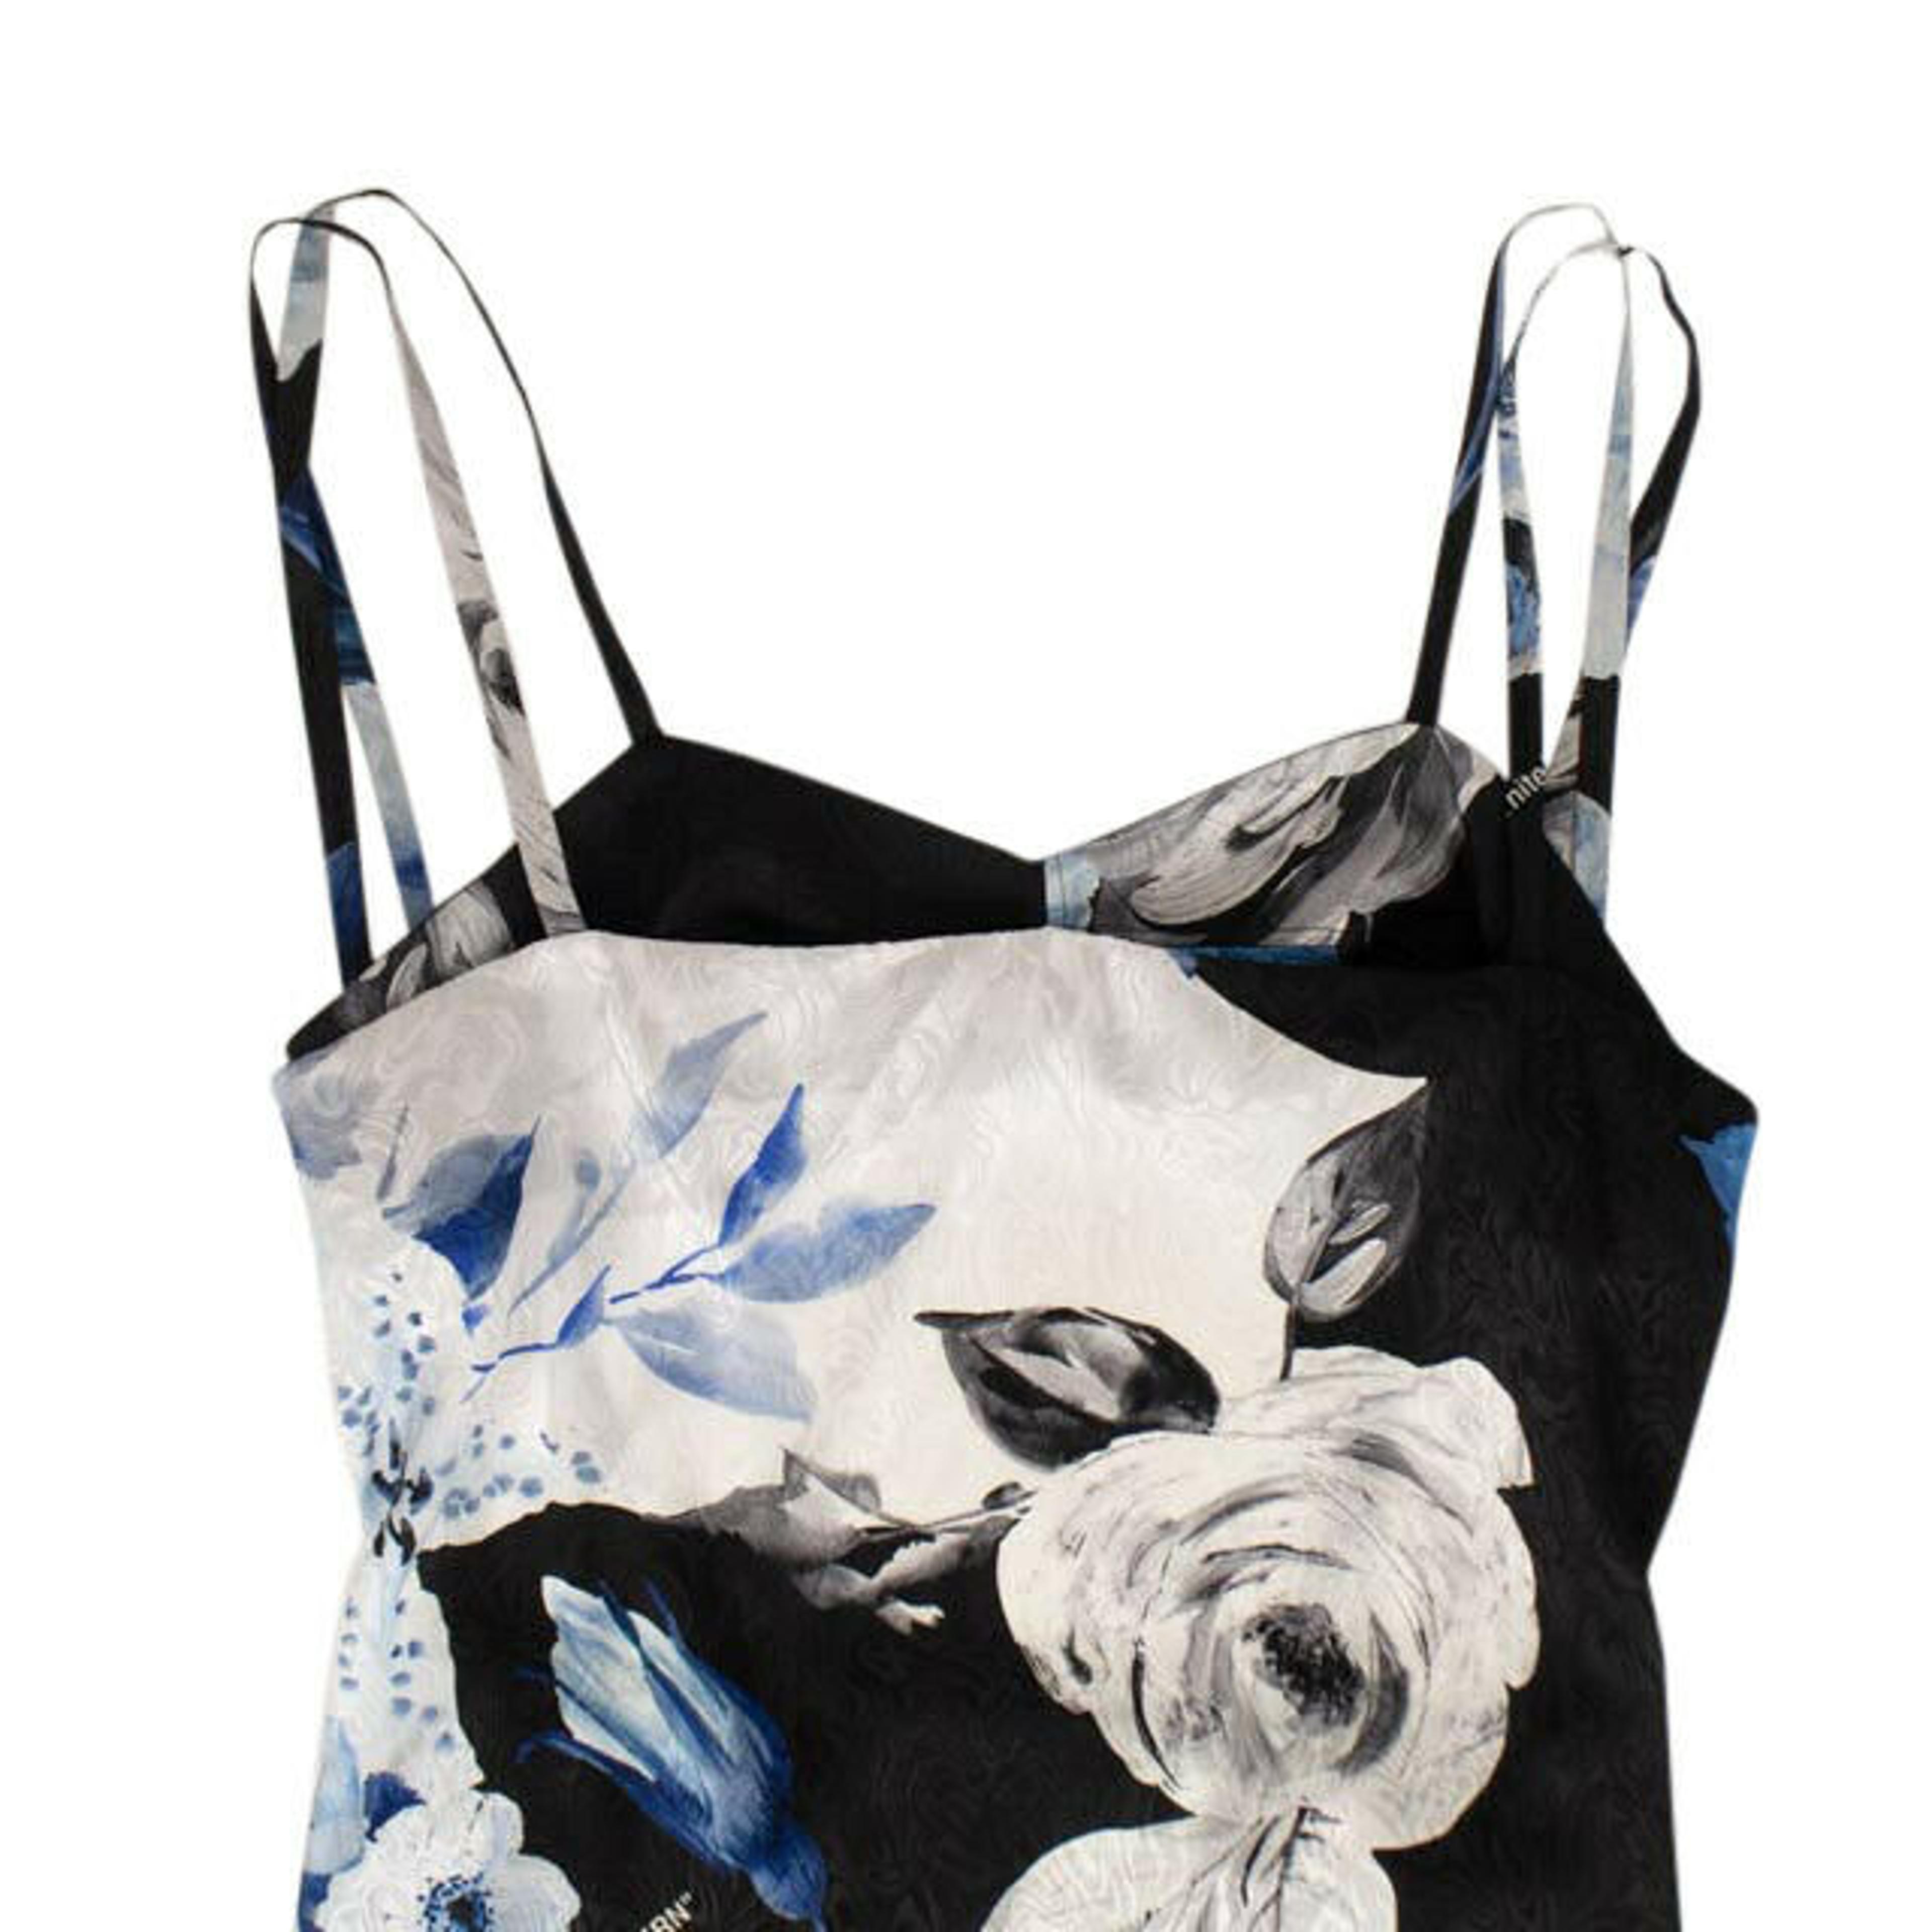 Alternate View 1 of Off-White C/O Virgil Abloh Floral Print Dress - Black/Blue